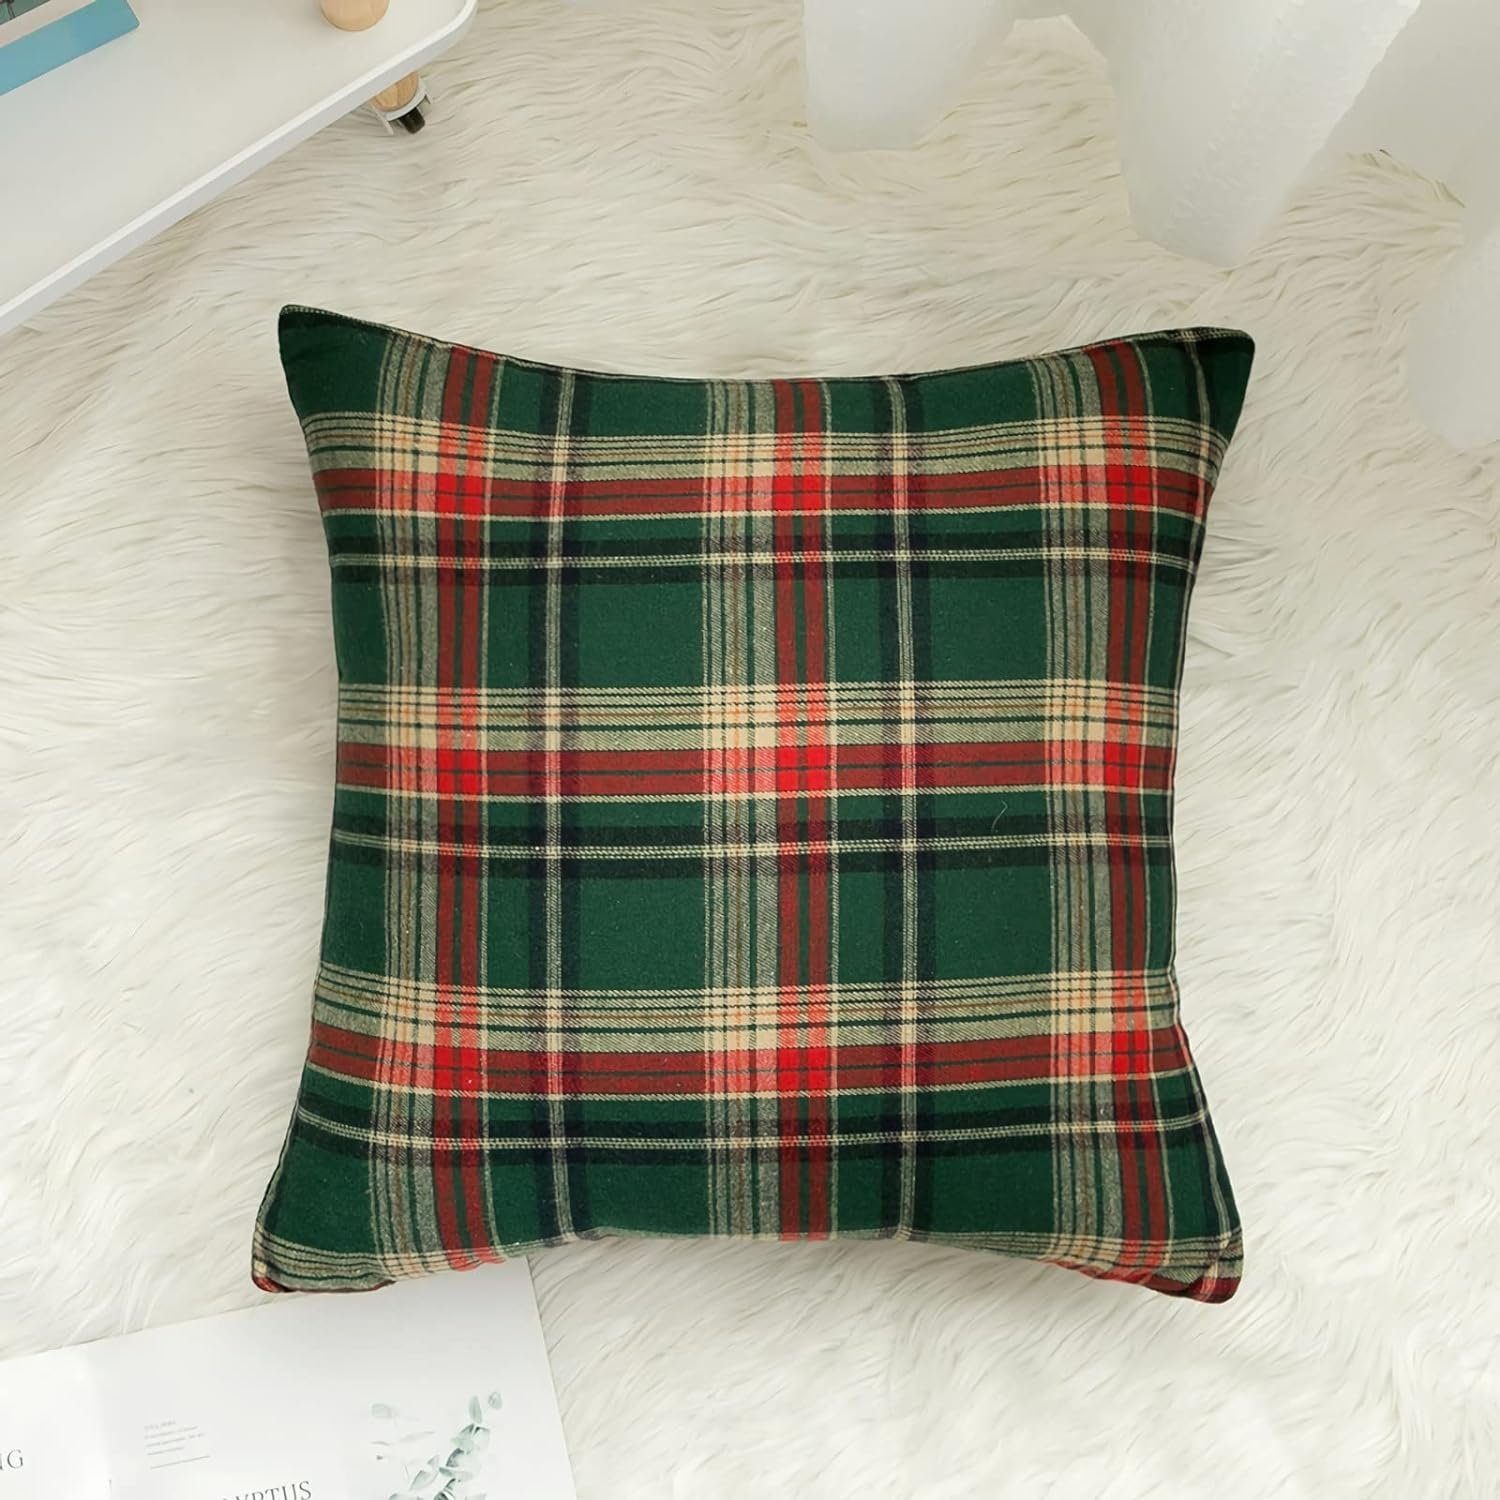 Couch Sofa Decor für Kissenbezüge 2erPack, HIBNOPN Stück) Grün 45x45 (2 cm Kissenbezug Home Kariertes